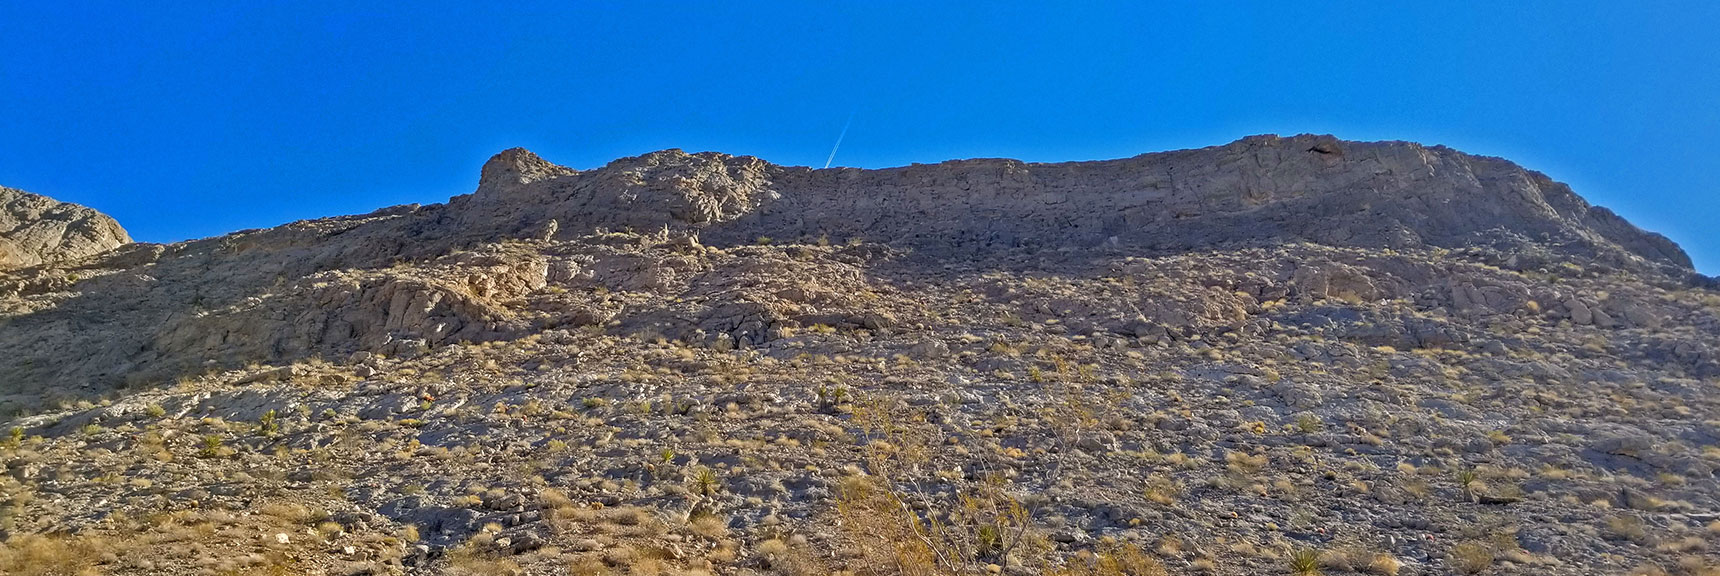 Western Cliffs Come into View | Lone Mountain | Las Vegas, Nevada